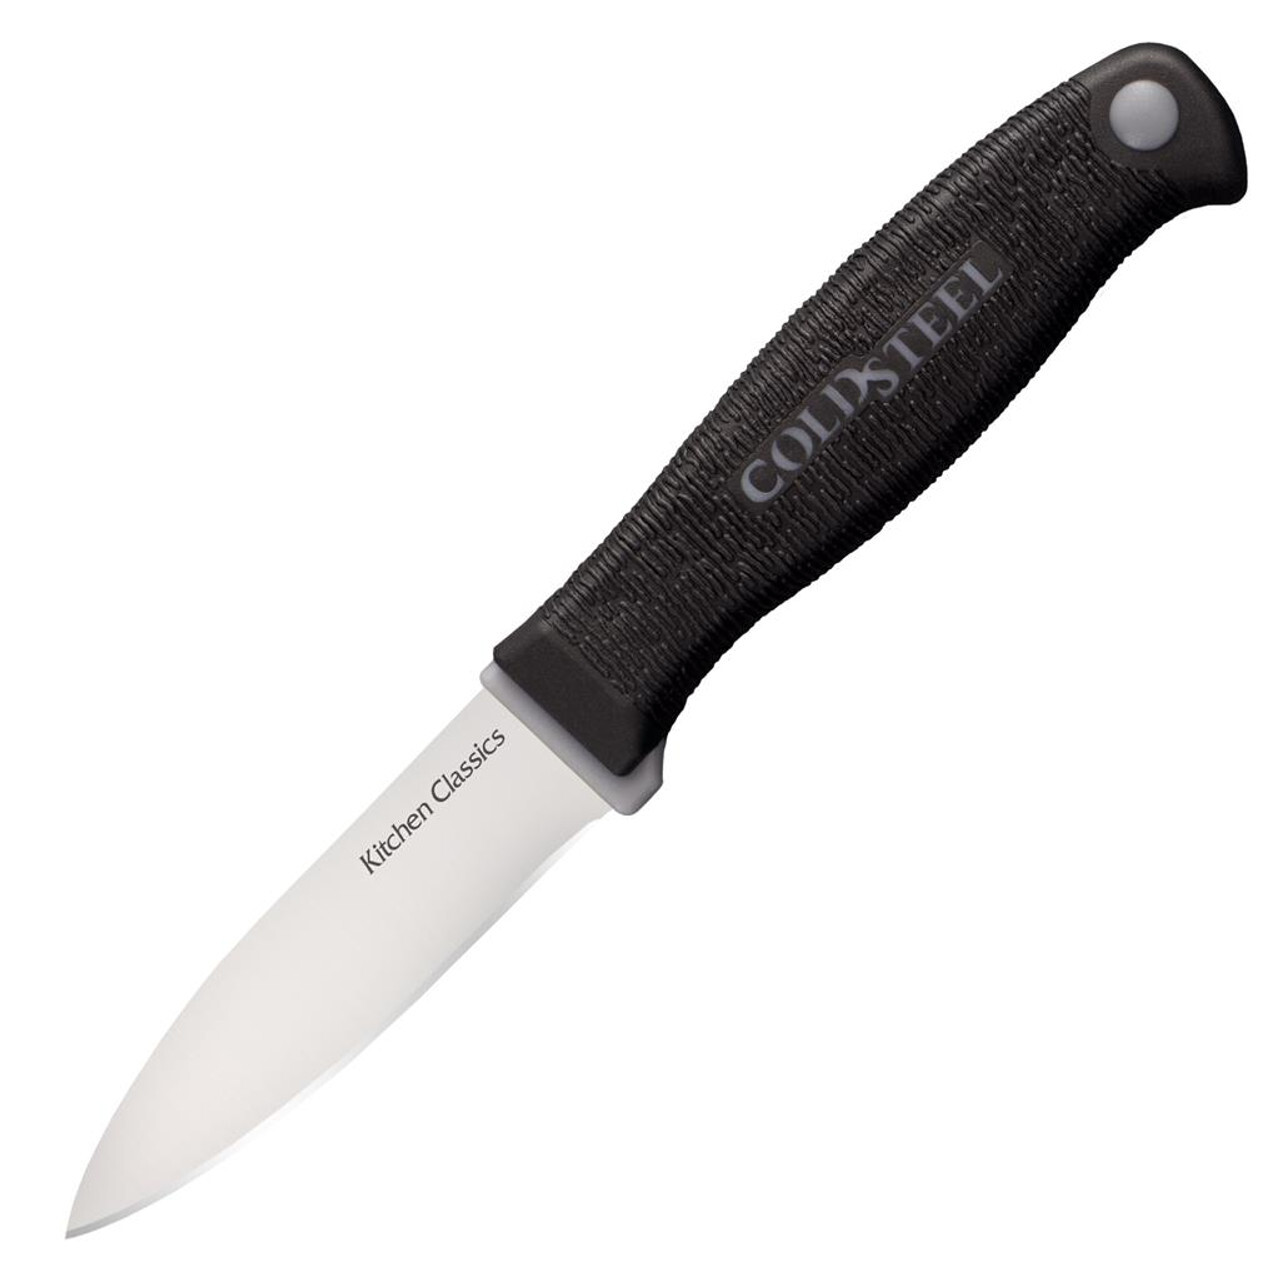 Нож овощной Paring knife, 7.5 см